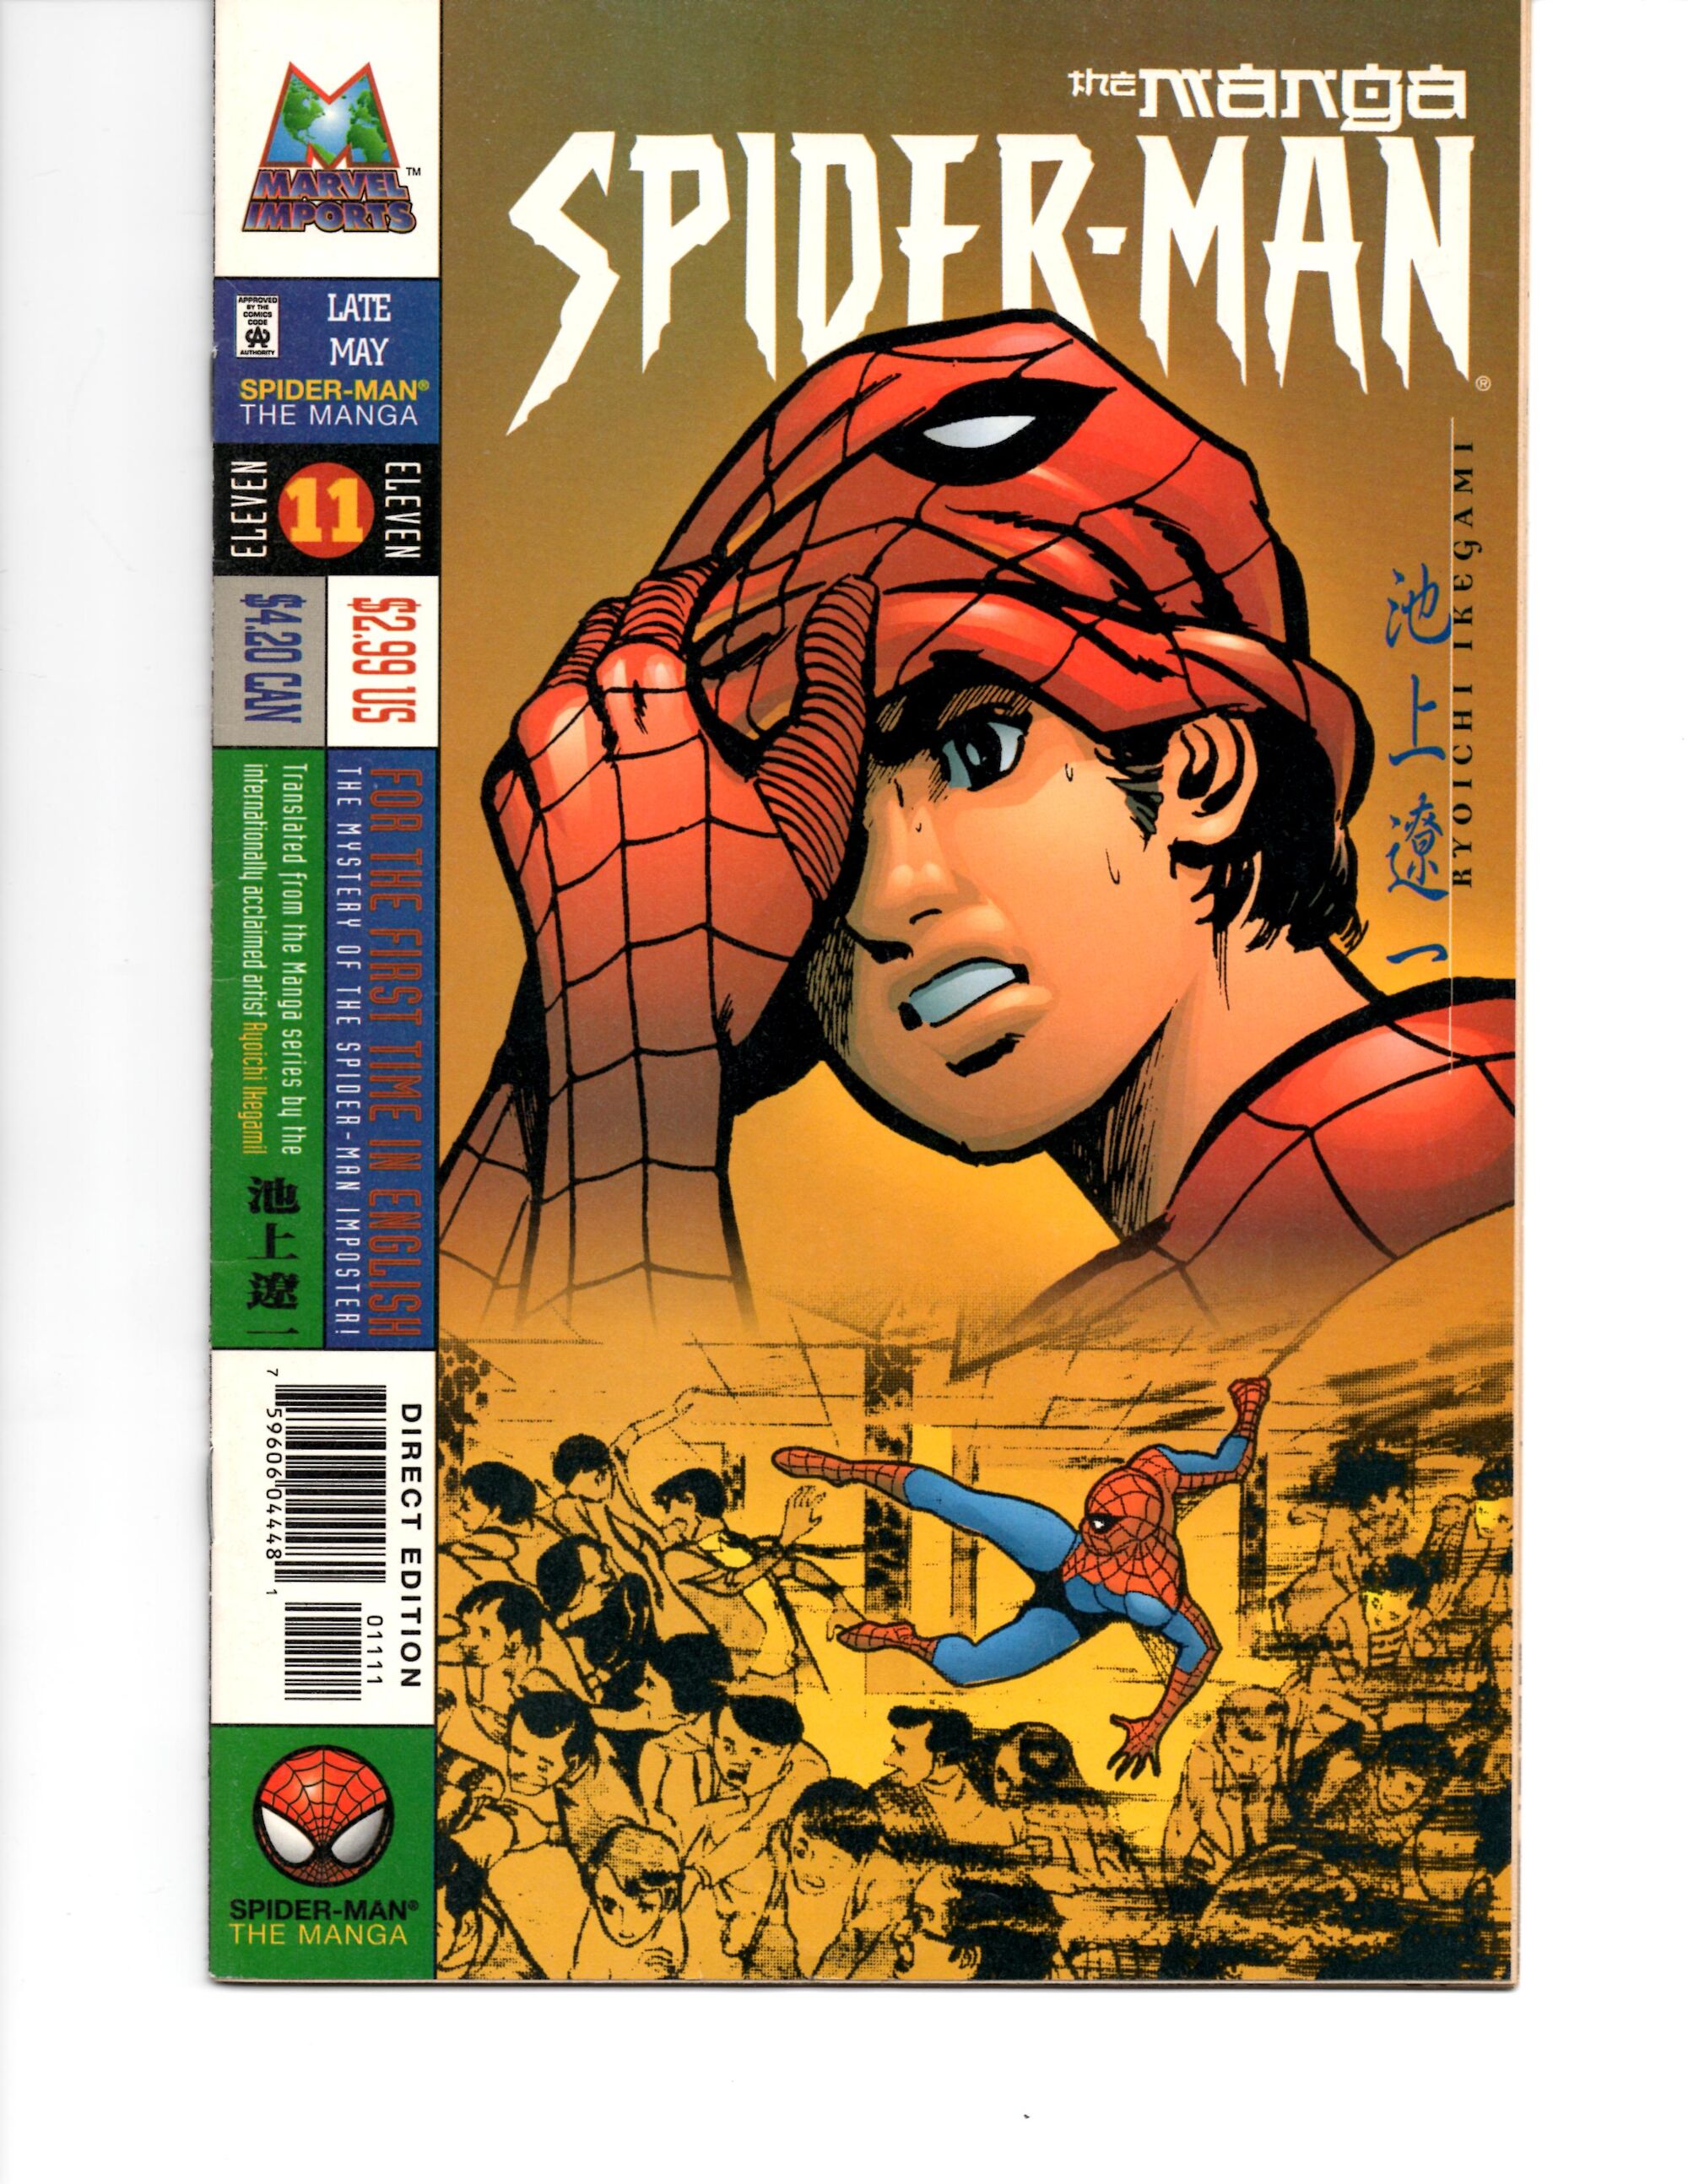 SpiderMan The Manga Vol 1 11 Marvel Database Fandom